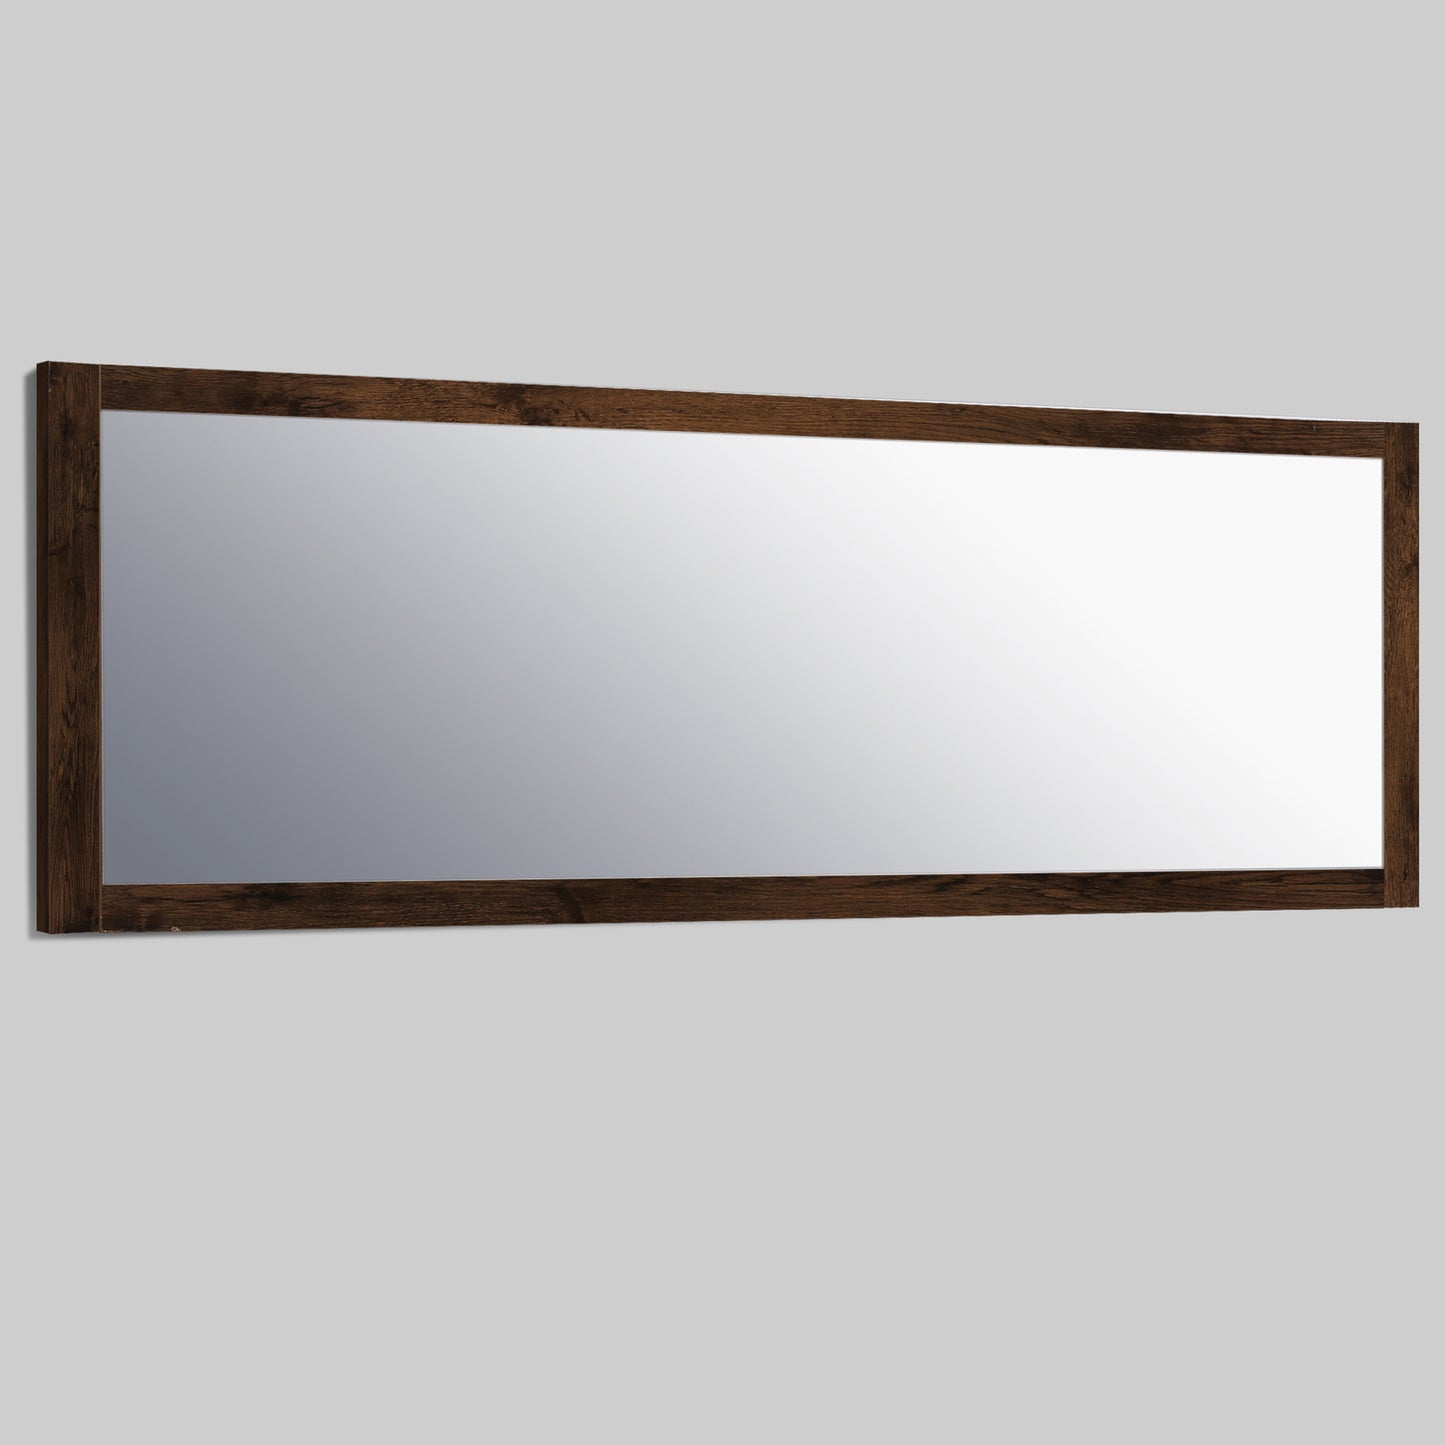 Eviva Sun 72" Rosewood Full Framed Bathroom Wall Mirror